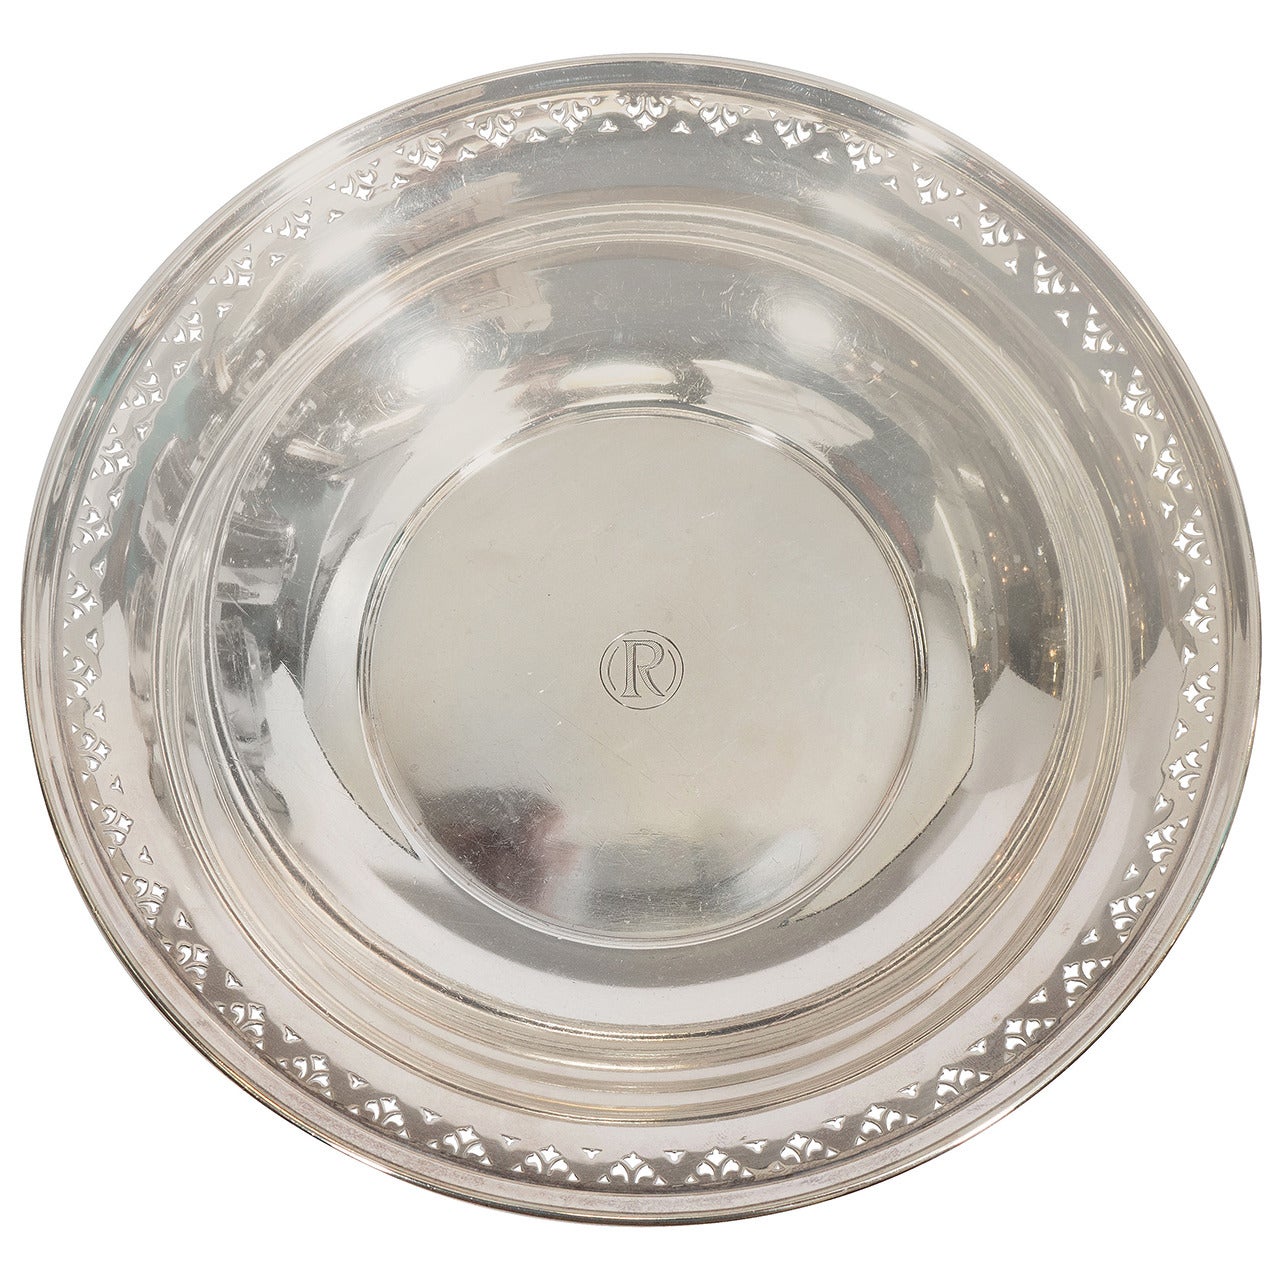 Antique Tiffany & Co. Sterling Silver Pierced Edge Bowl